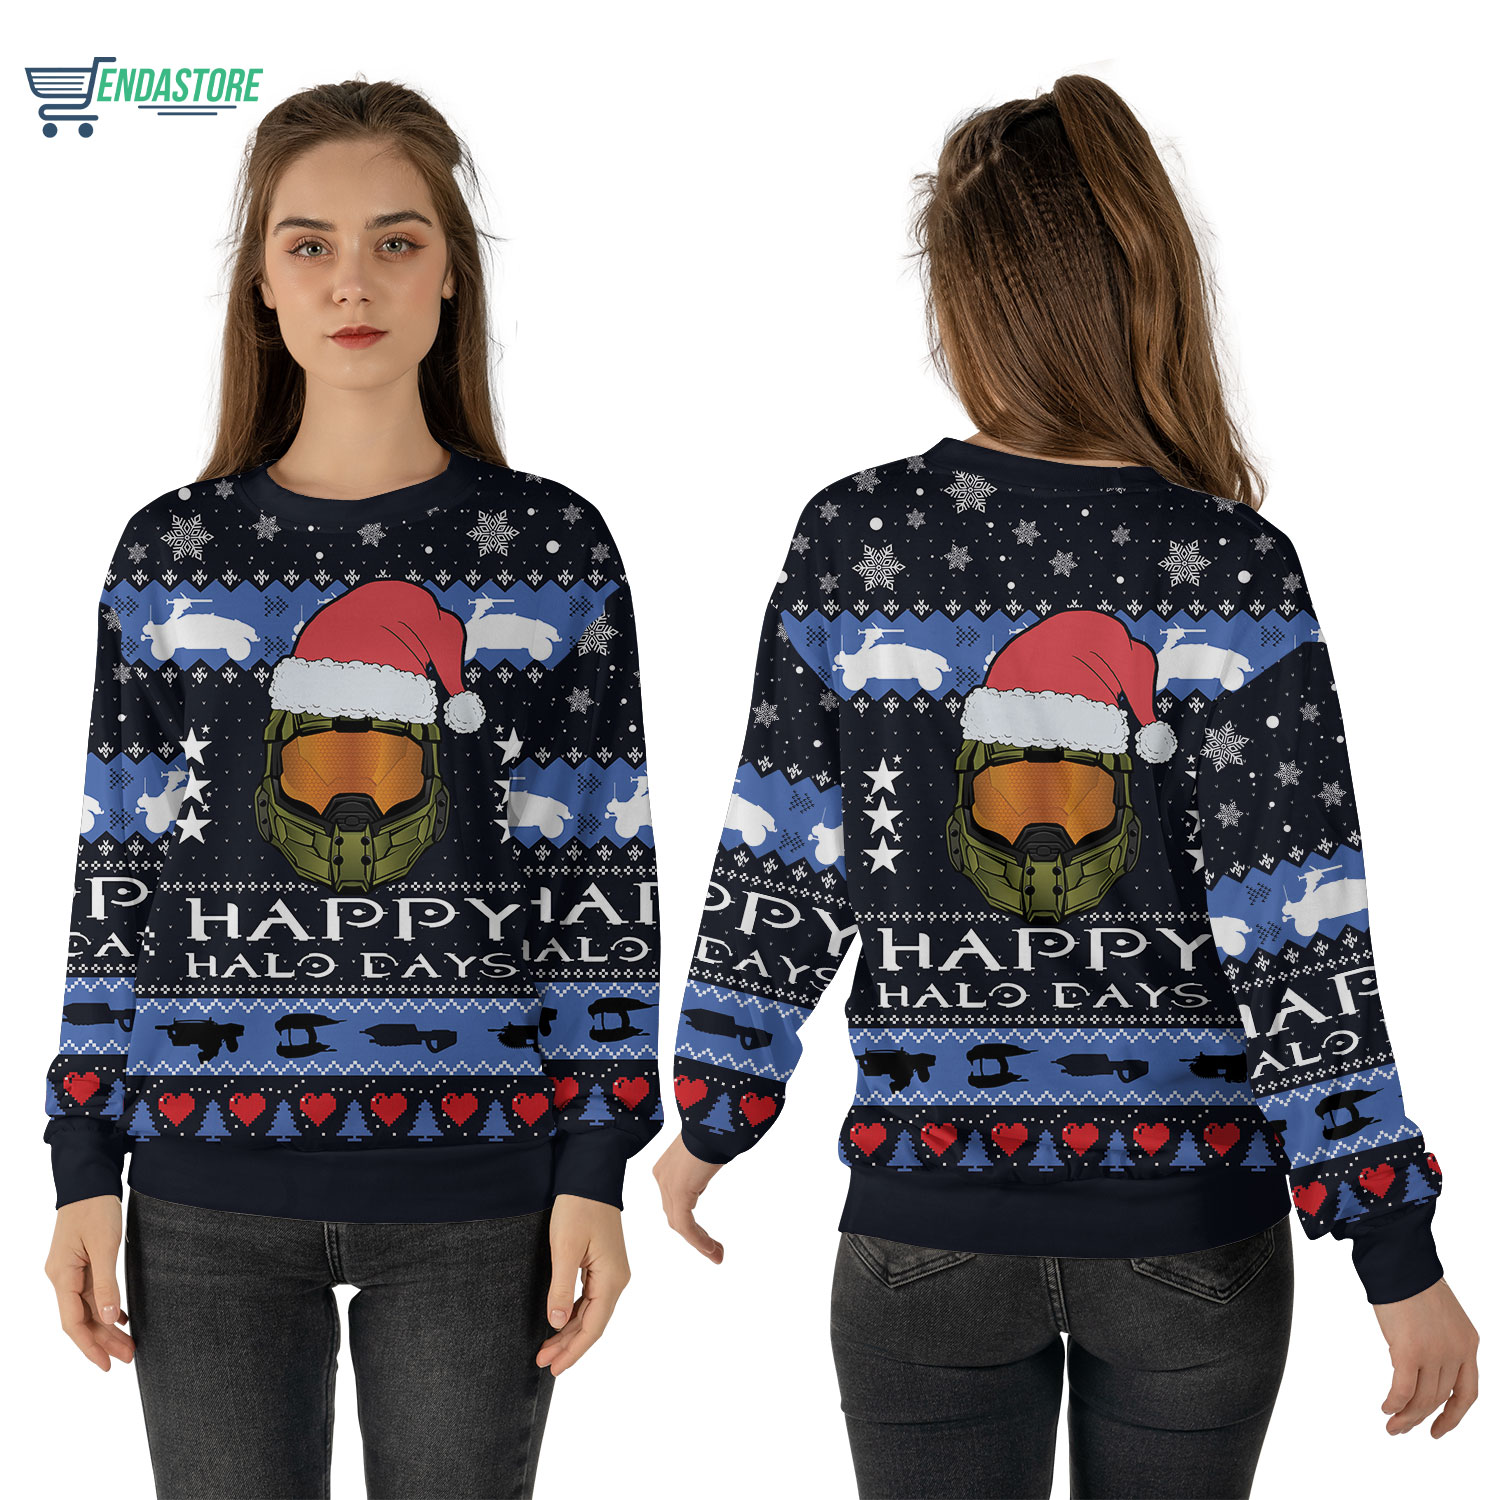 Happy halo days Christmas sweater - Endastore.com